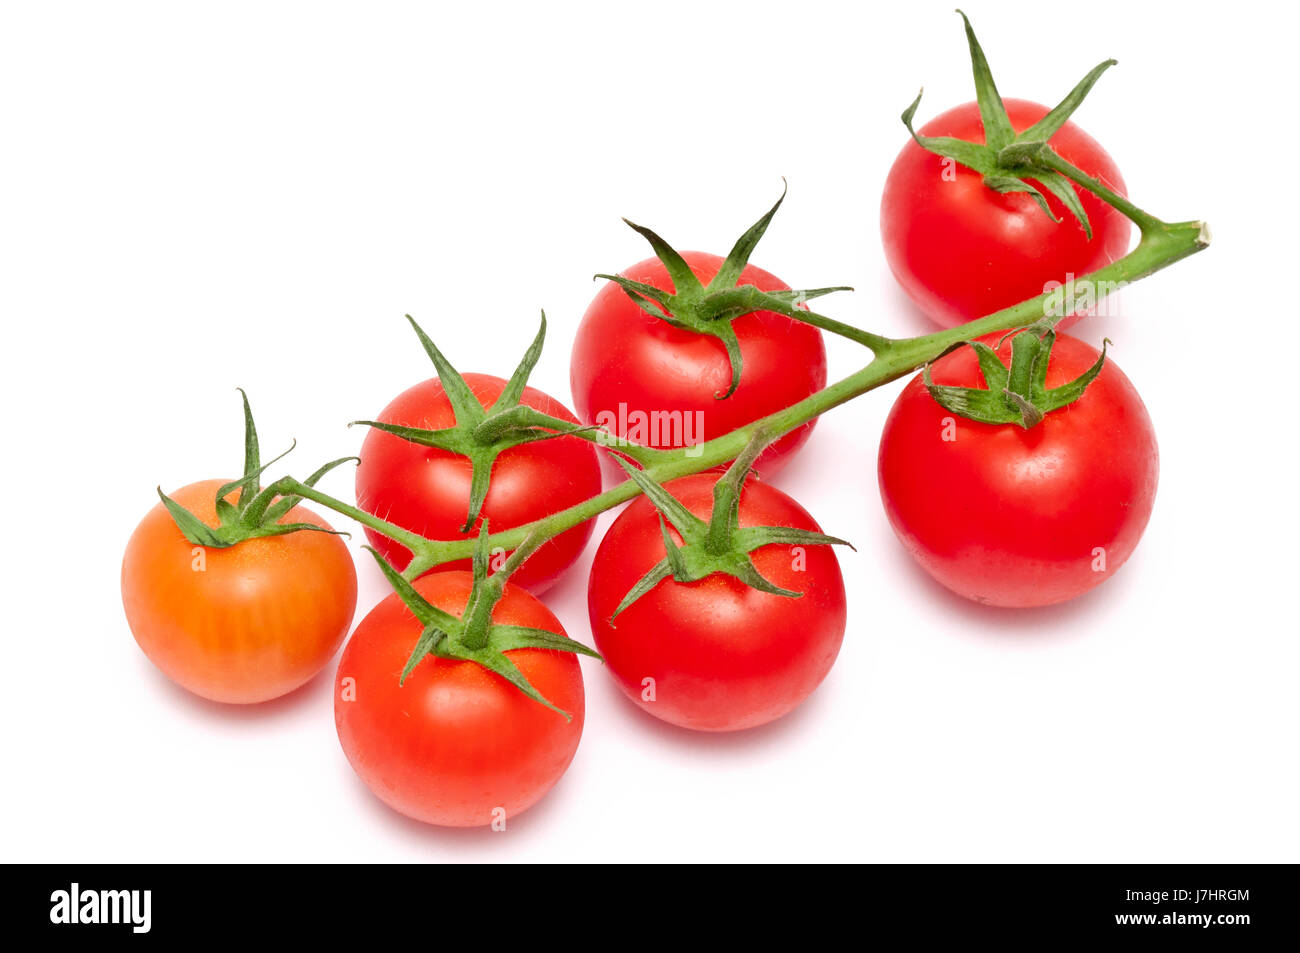 Vegetali di pomodori pomodori rossi aliment cibo vitamina sanitario europeo vuoto Foto Stock